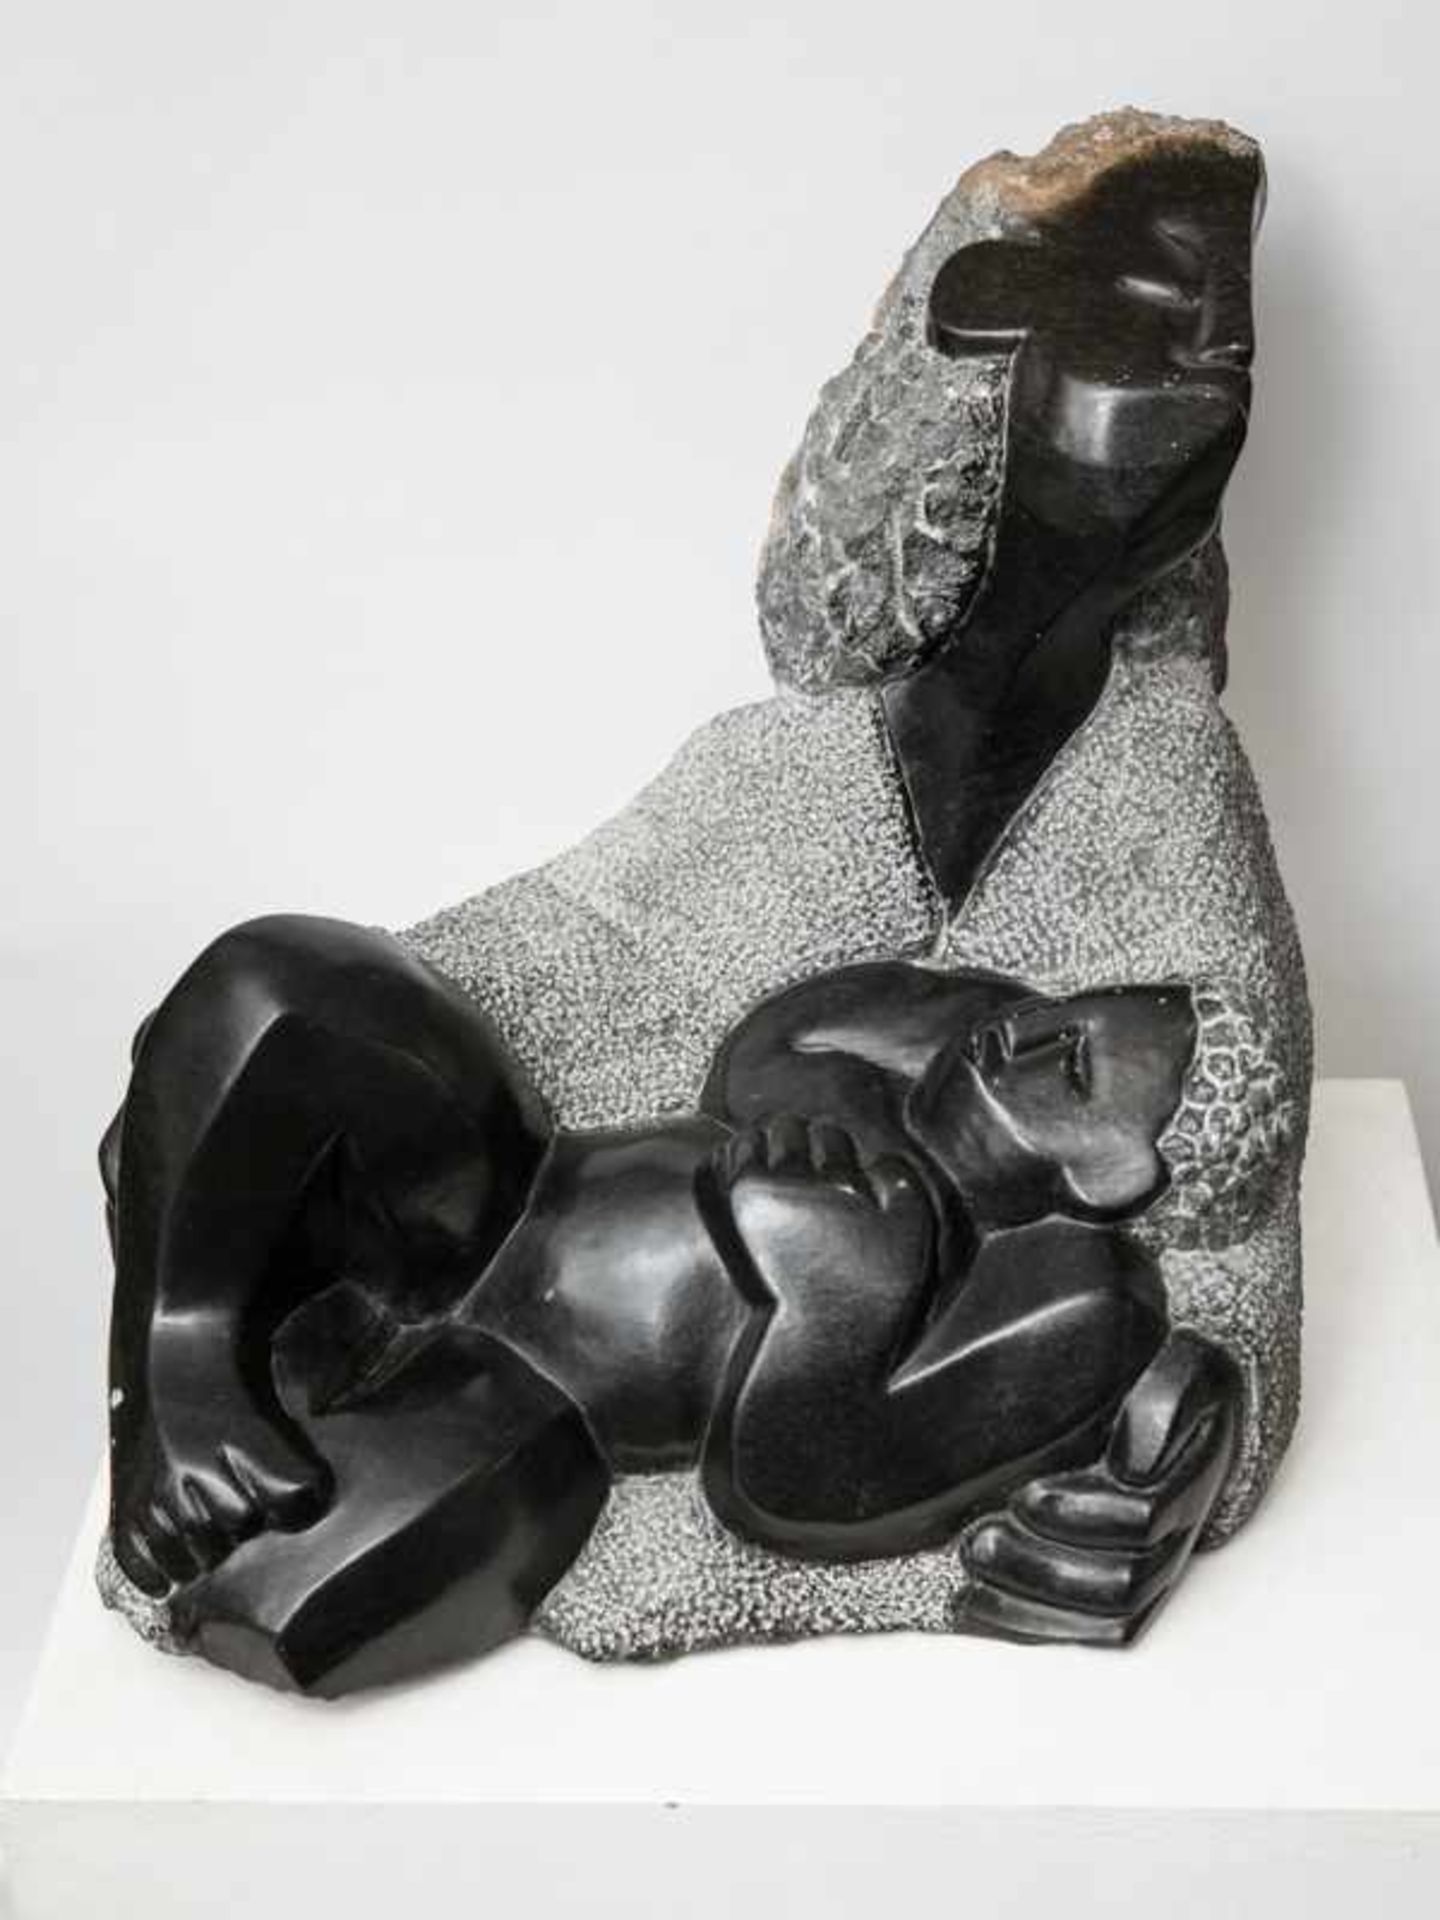 Figurenplastik "Mutter mit Kind", sog. Shona-Skulptur, Simbabwe, Afrika, 2. Hälfte 20. Jh.